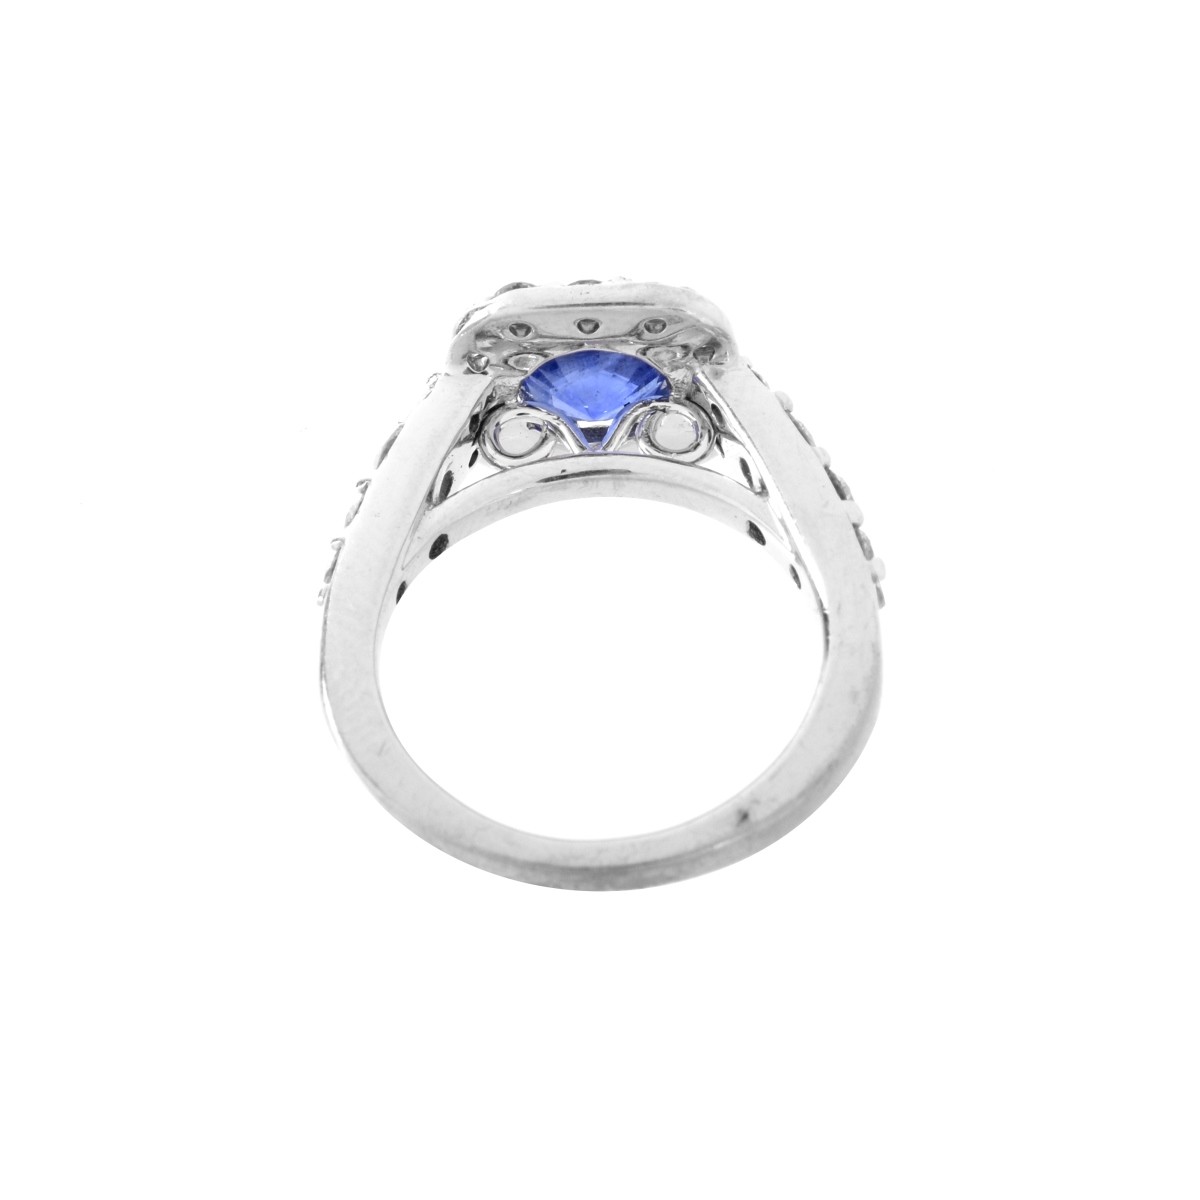 GIA Burma Sapphire and 14K Ring